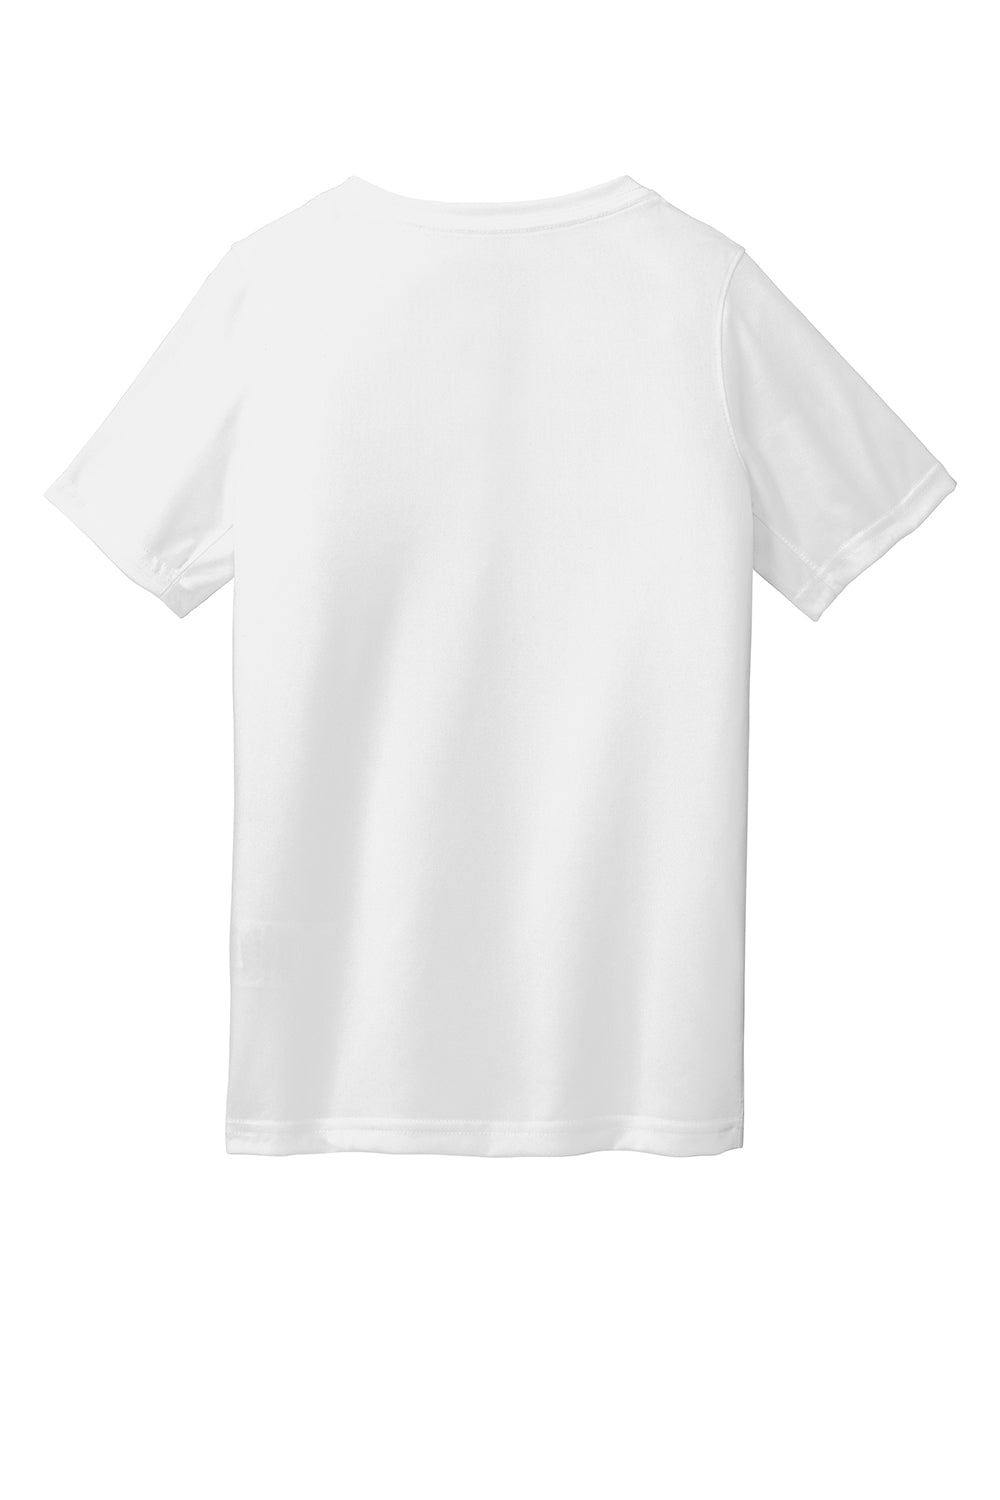 Nike DV7317 Youth Team rLegend Dri-Fit Moisure Wicking Short Sleeve Crewneck T-Shirt White Flat Back